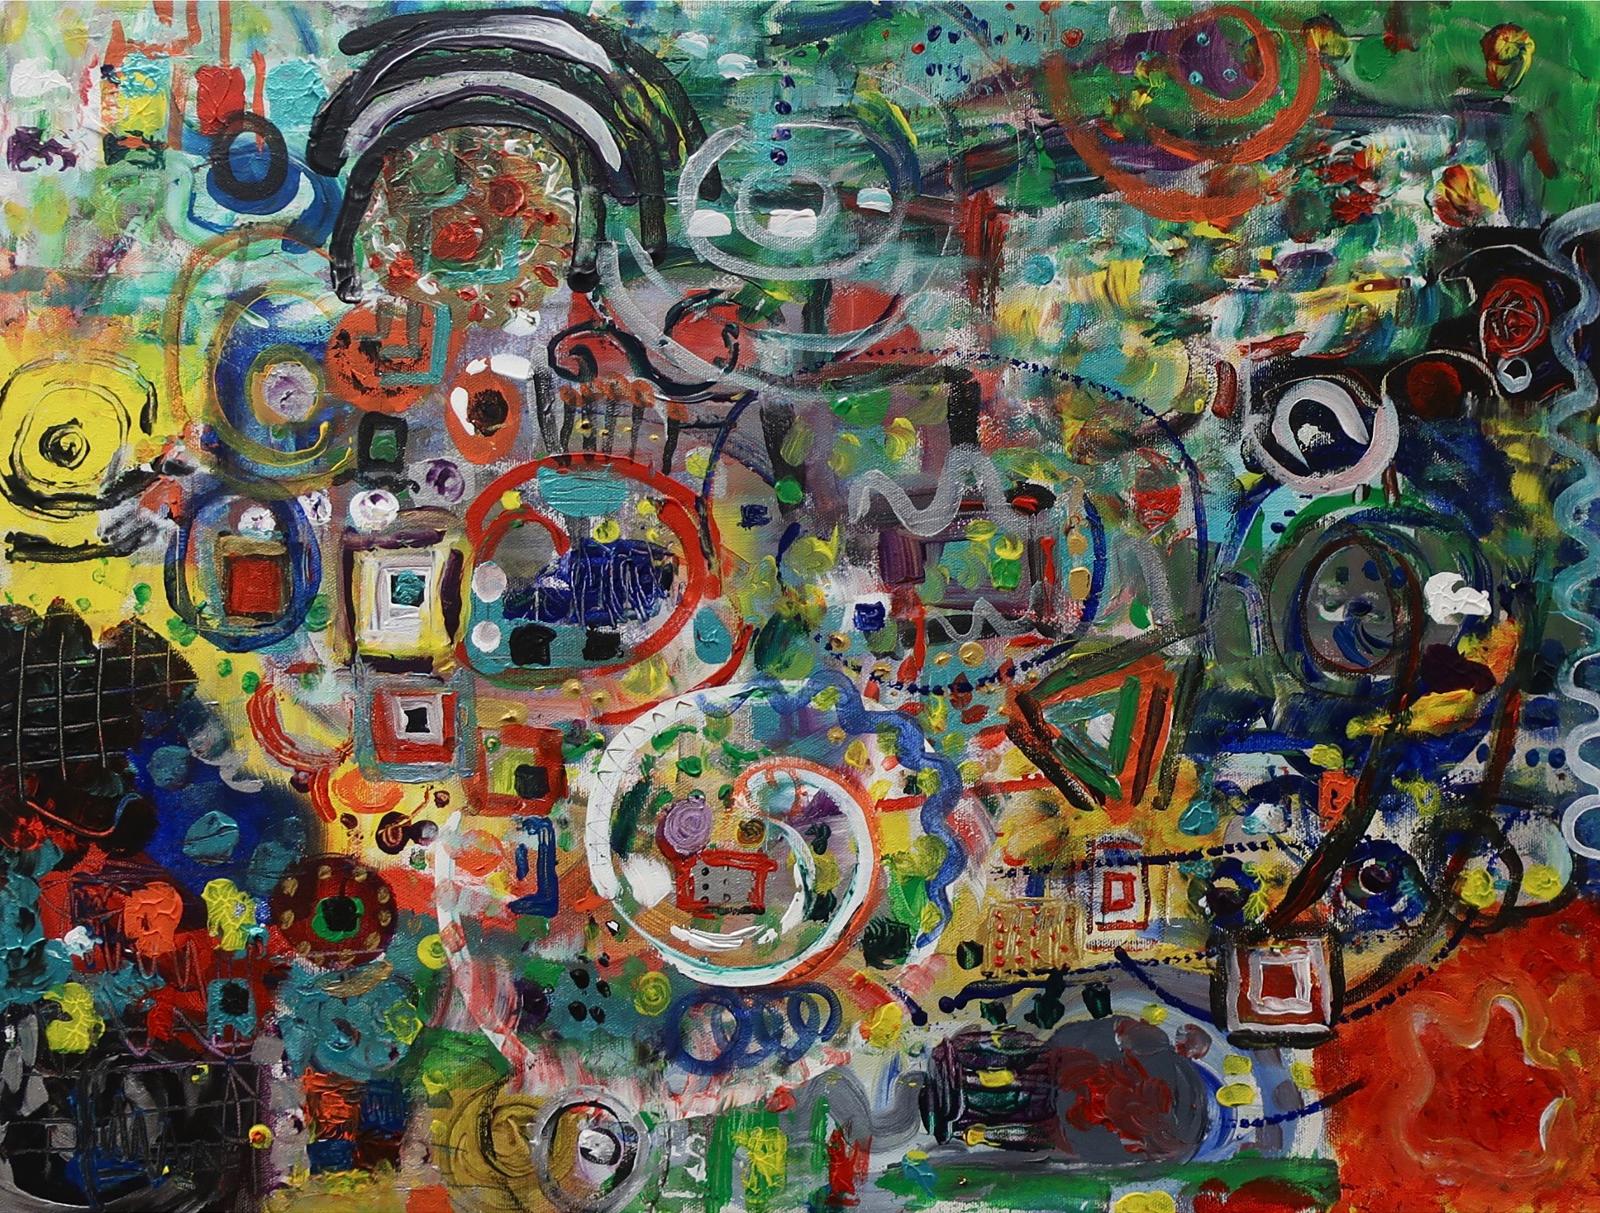 Sheldon Zuker - Untitled (Abstract)